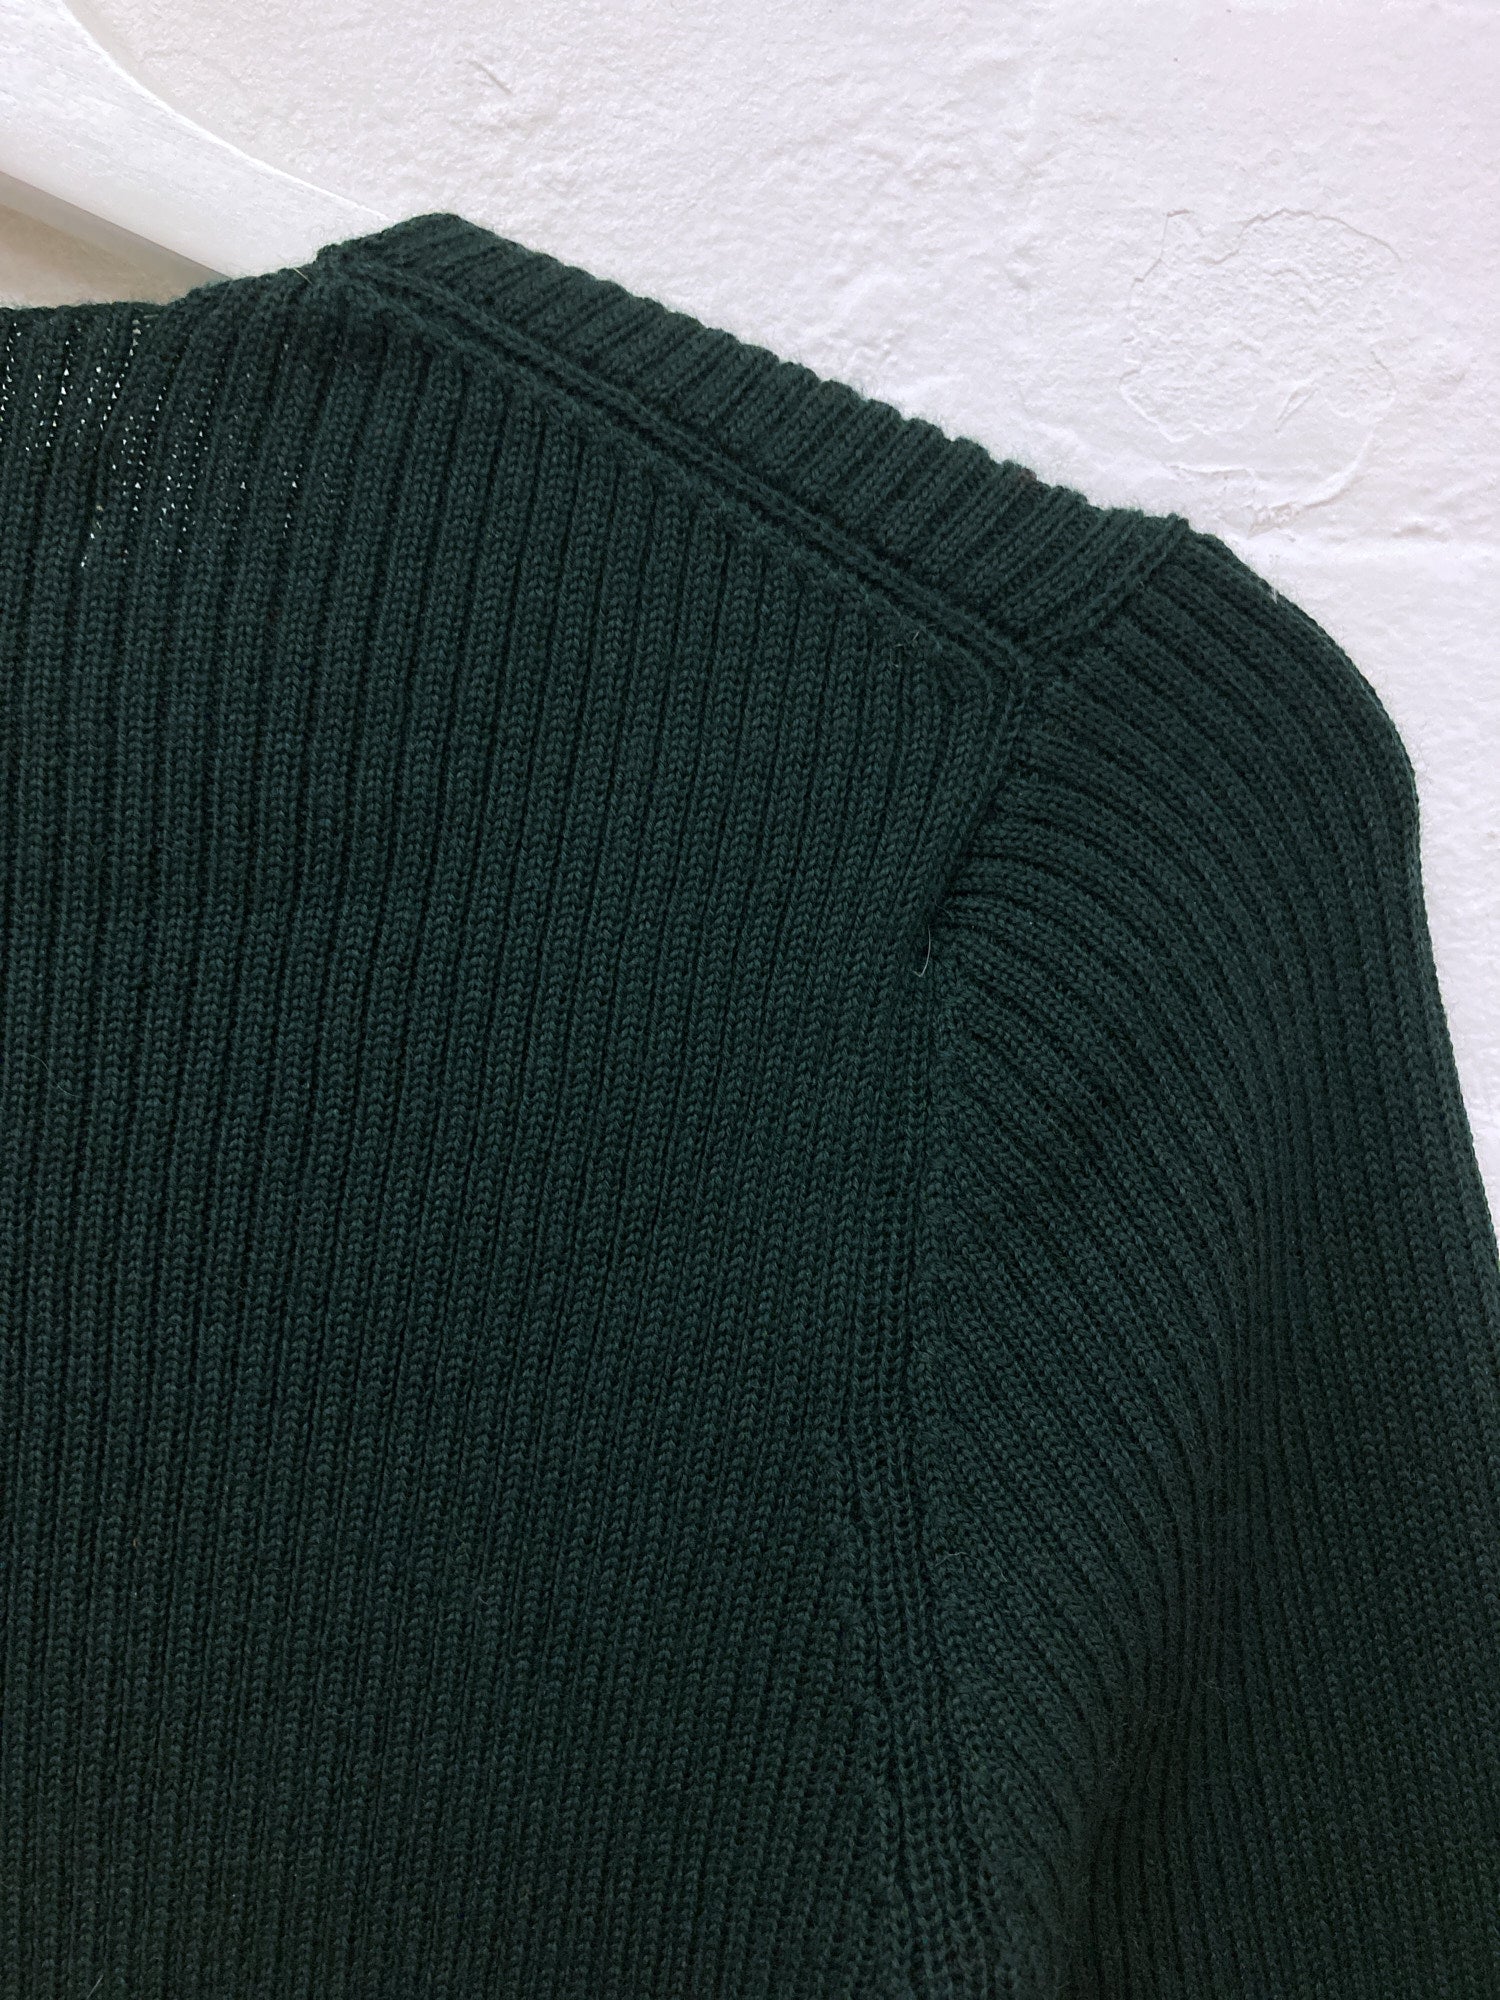 Comme des Garcons 1996 bottle green wool rib knit jumper - M S